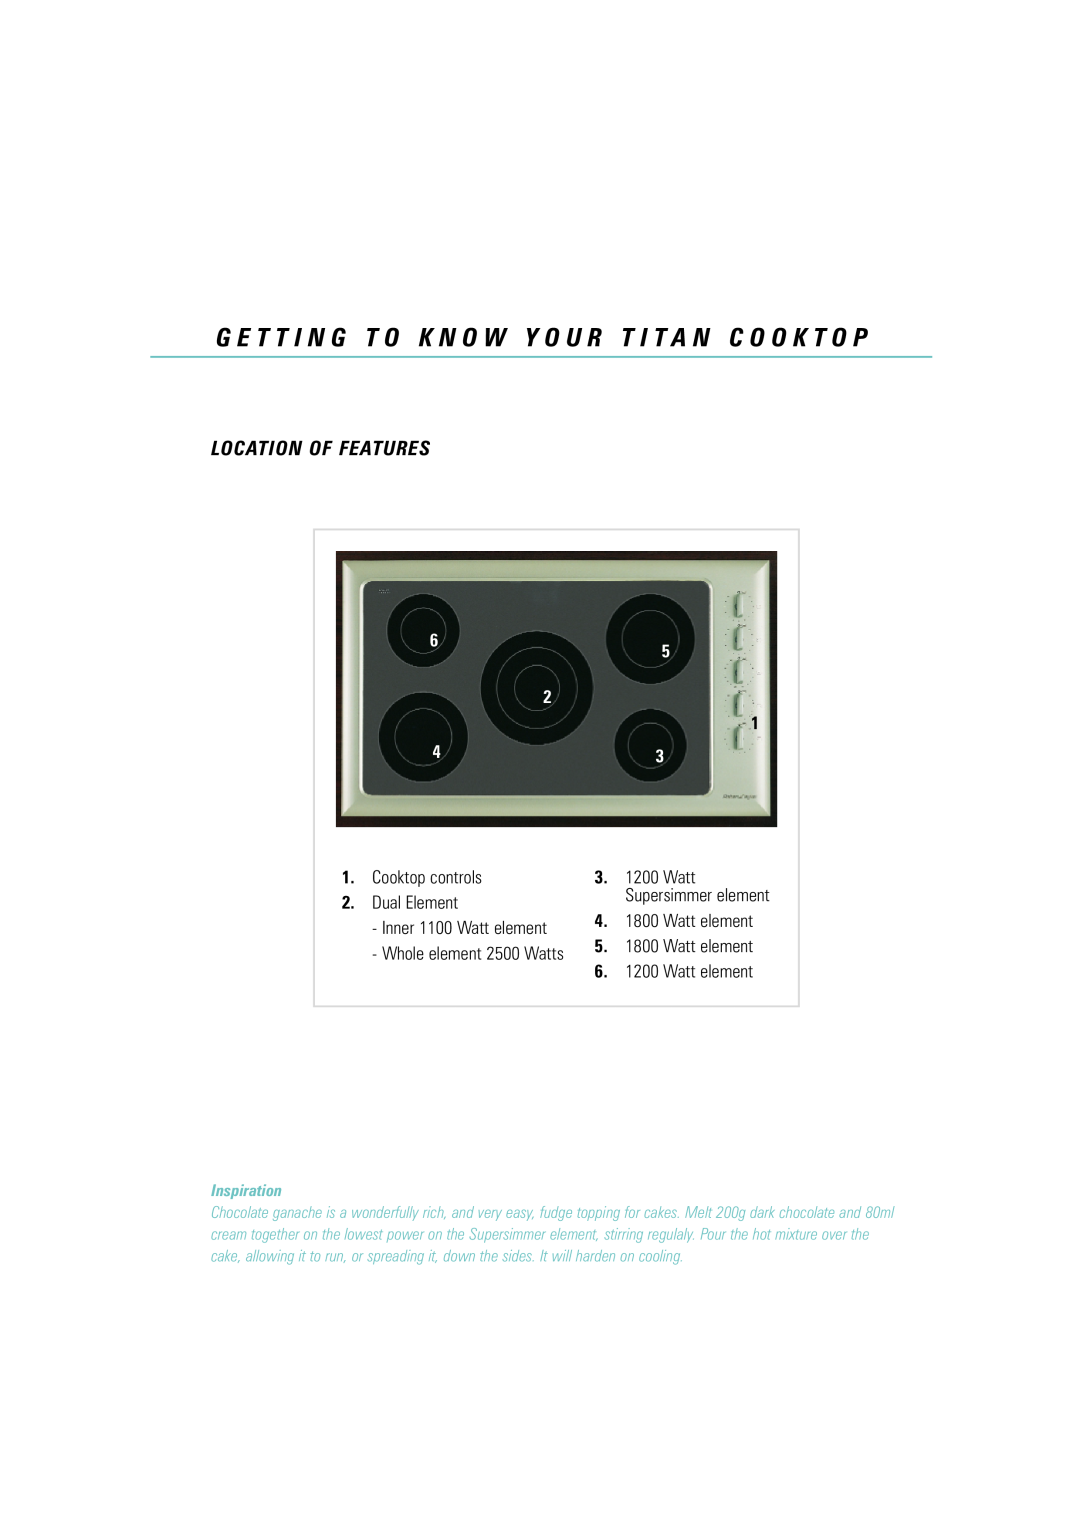 Fisher & Paykel Titan manual Location Of Features, 6 5, Cooktop controls, Dual Element, Inner 1100 Watt element 